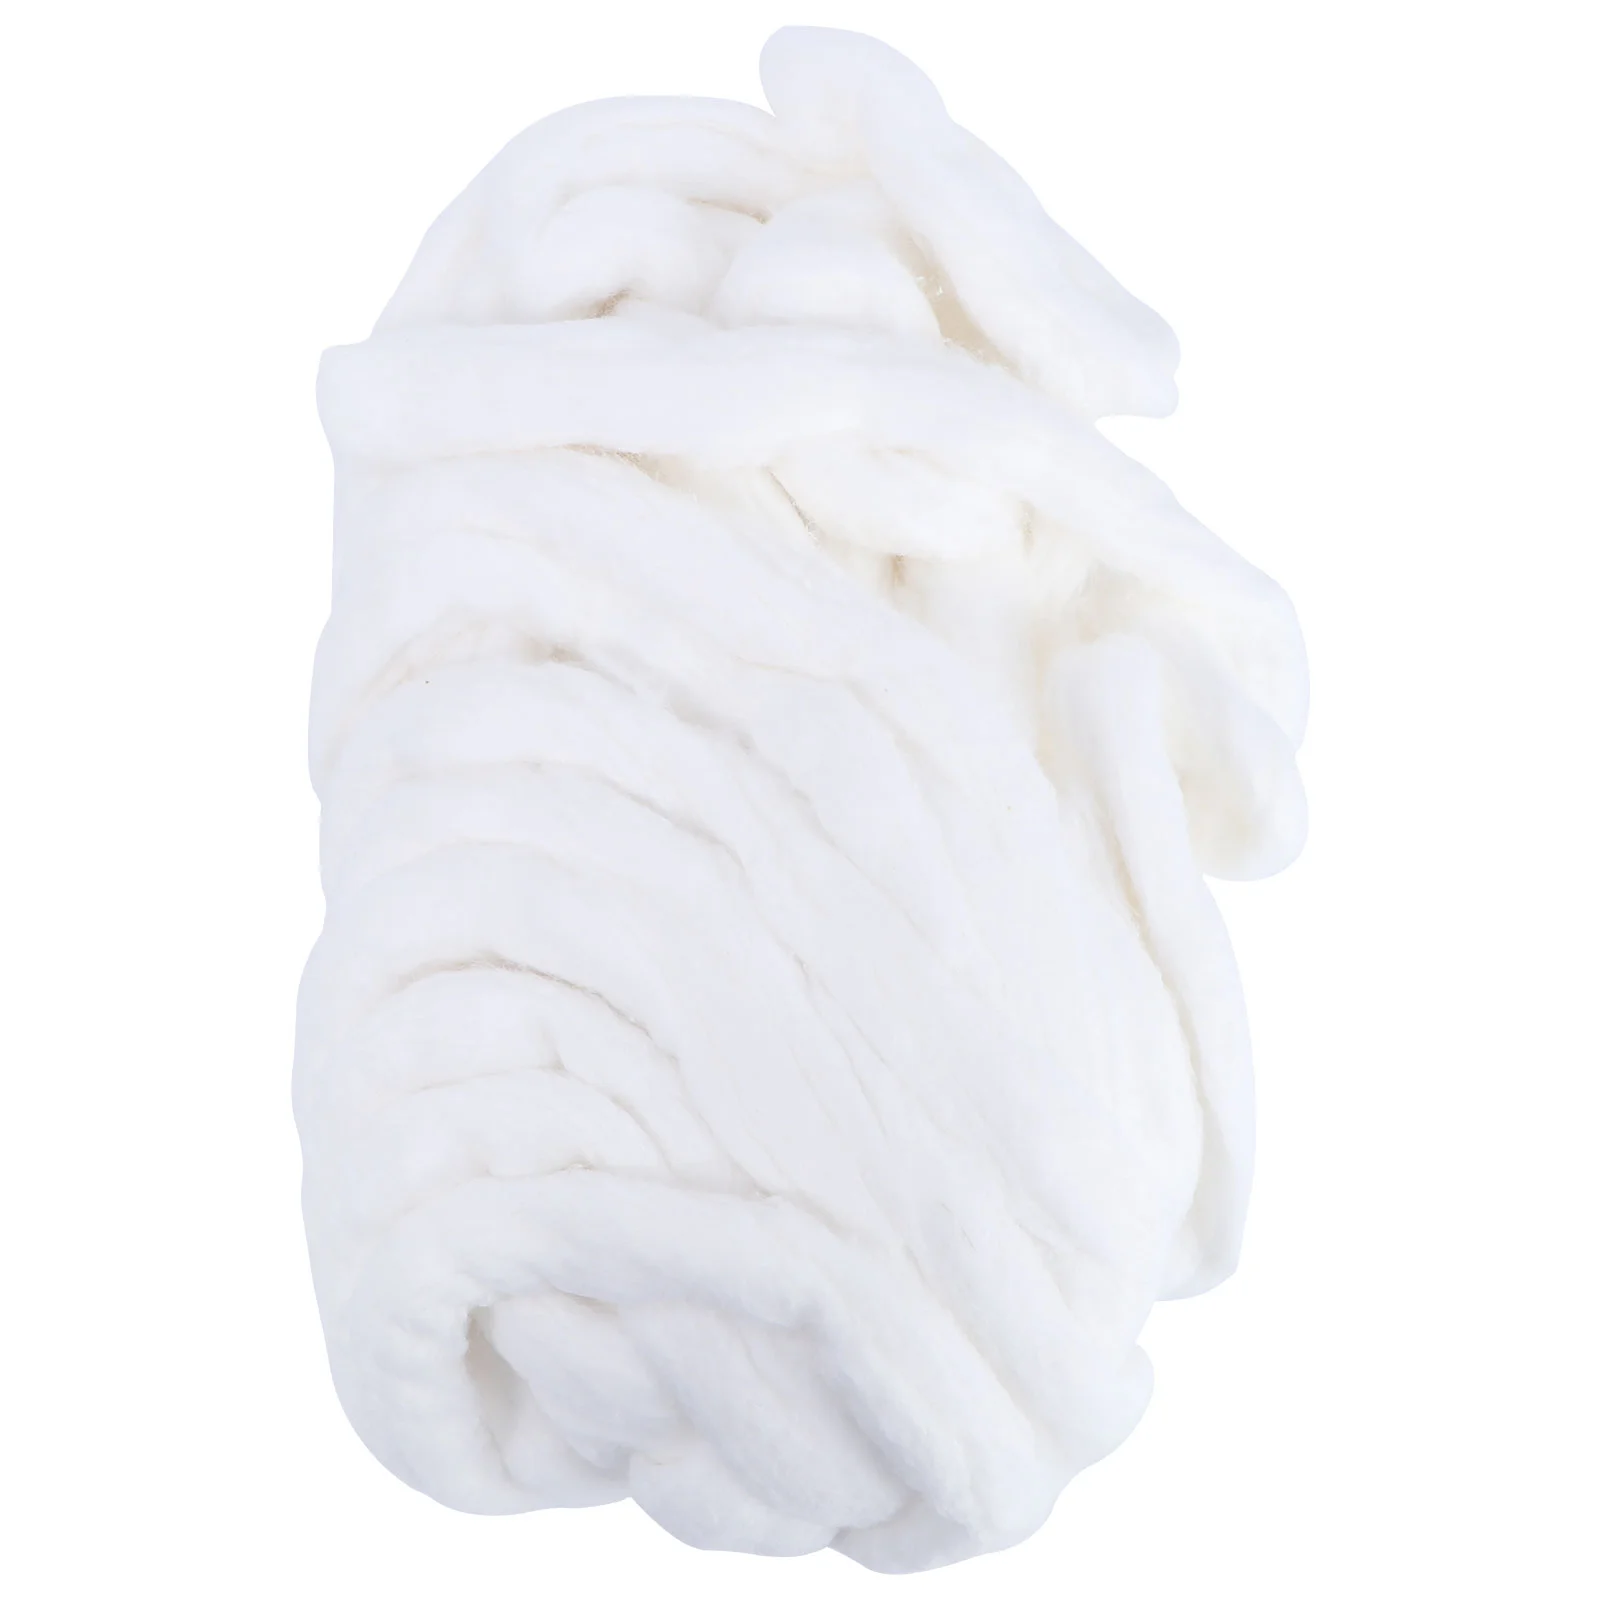 

Cotton Coil Beauty Strips Cotton Balls For Medical Nail Art Hair Salon Hairdressing Makeup Cotton Bulk 183G 1 Roll